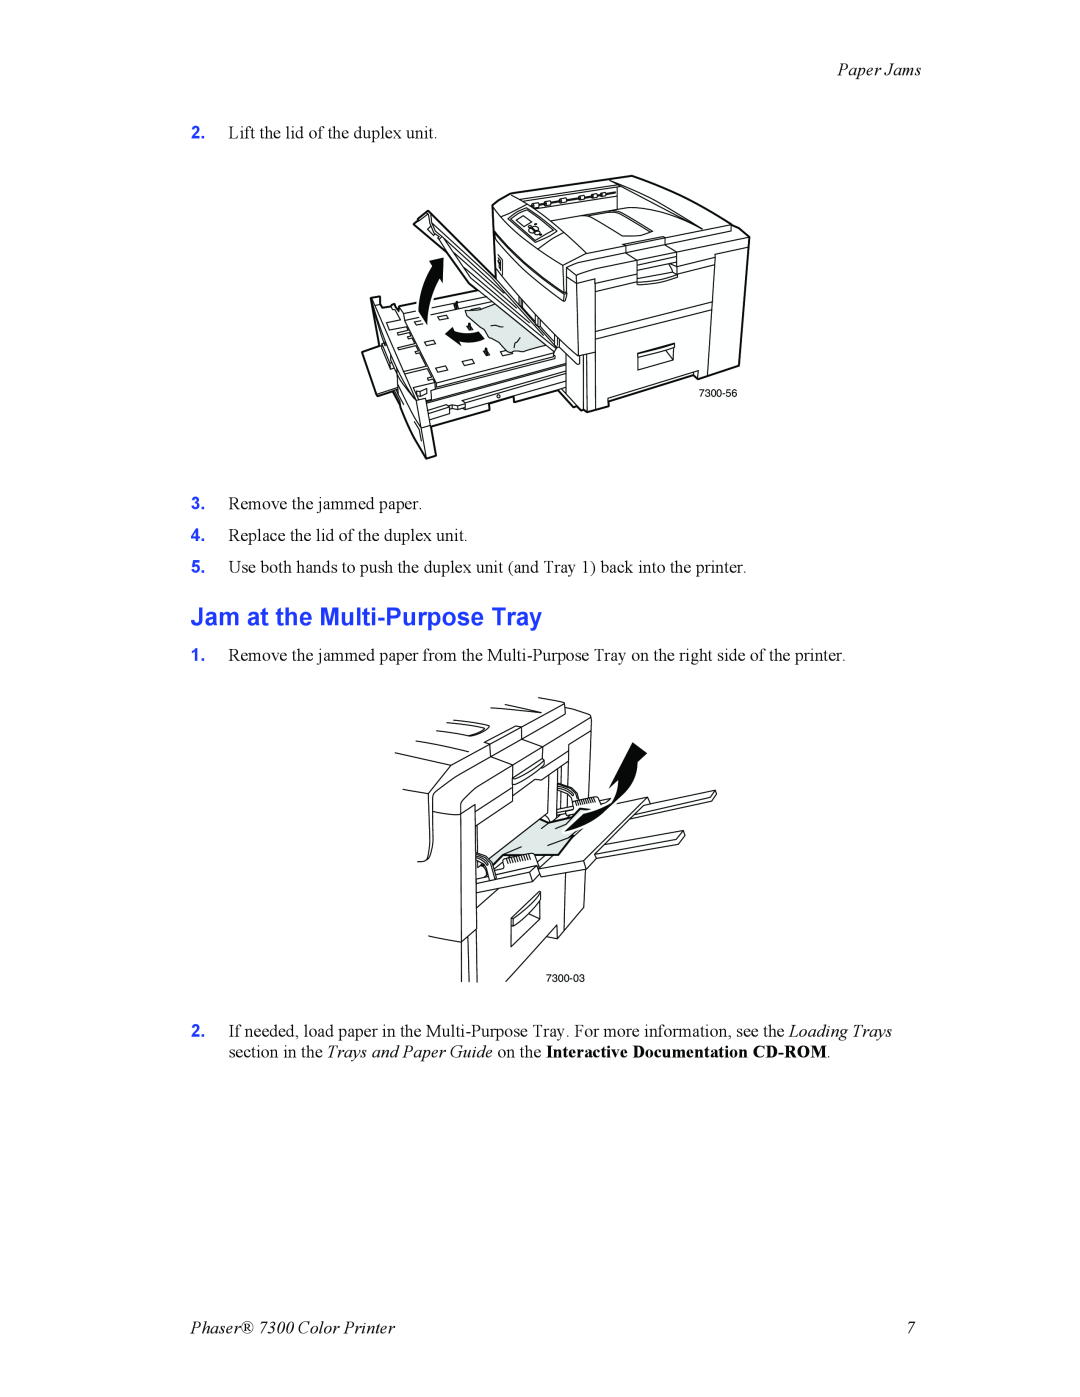 Xerox manual Jam at the Multi-Purpose Tray, Paper Jams, Phaser 7300 Color Printer 